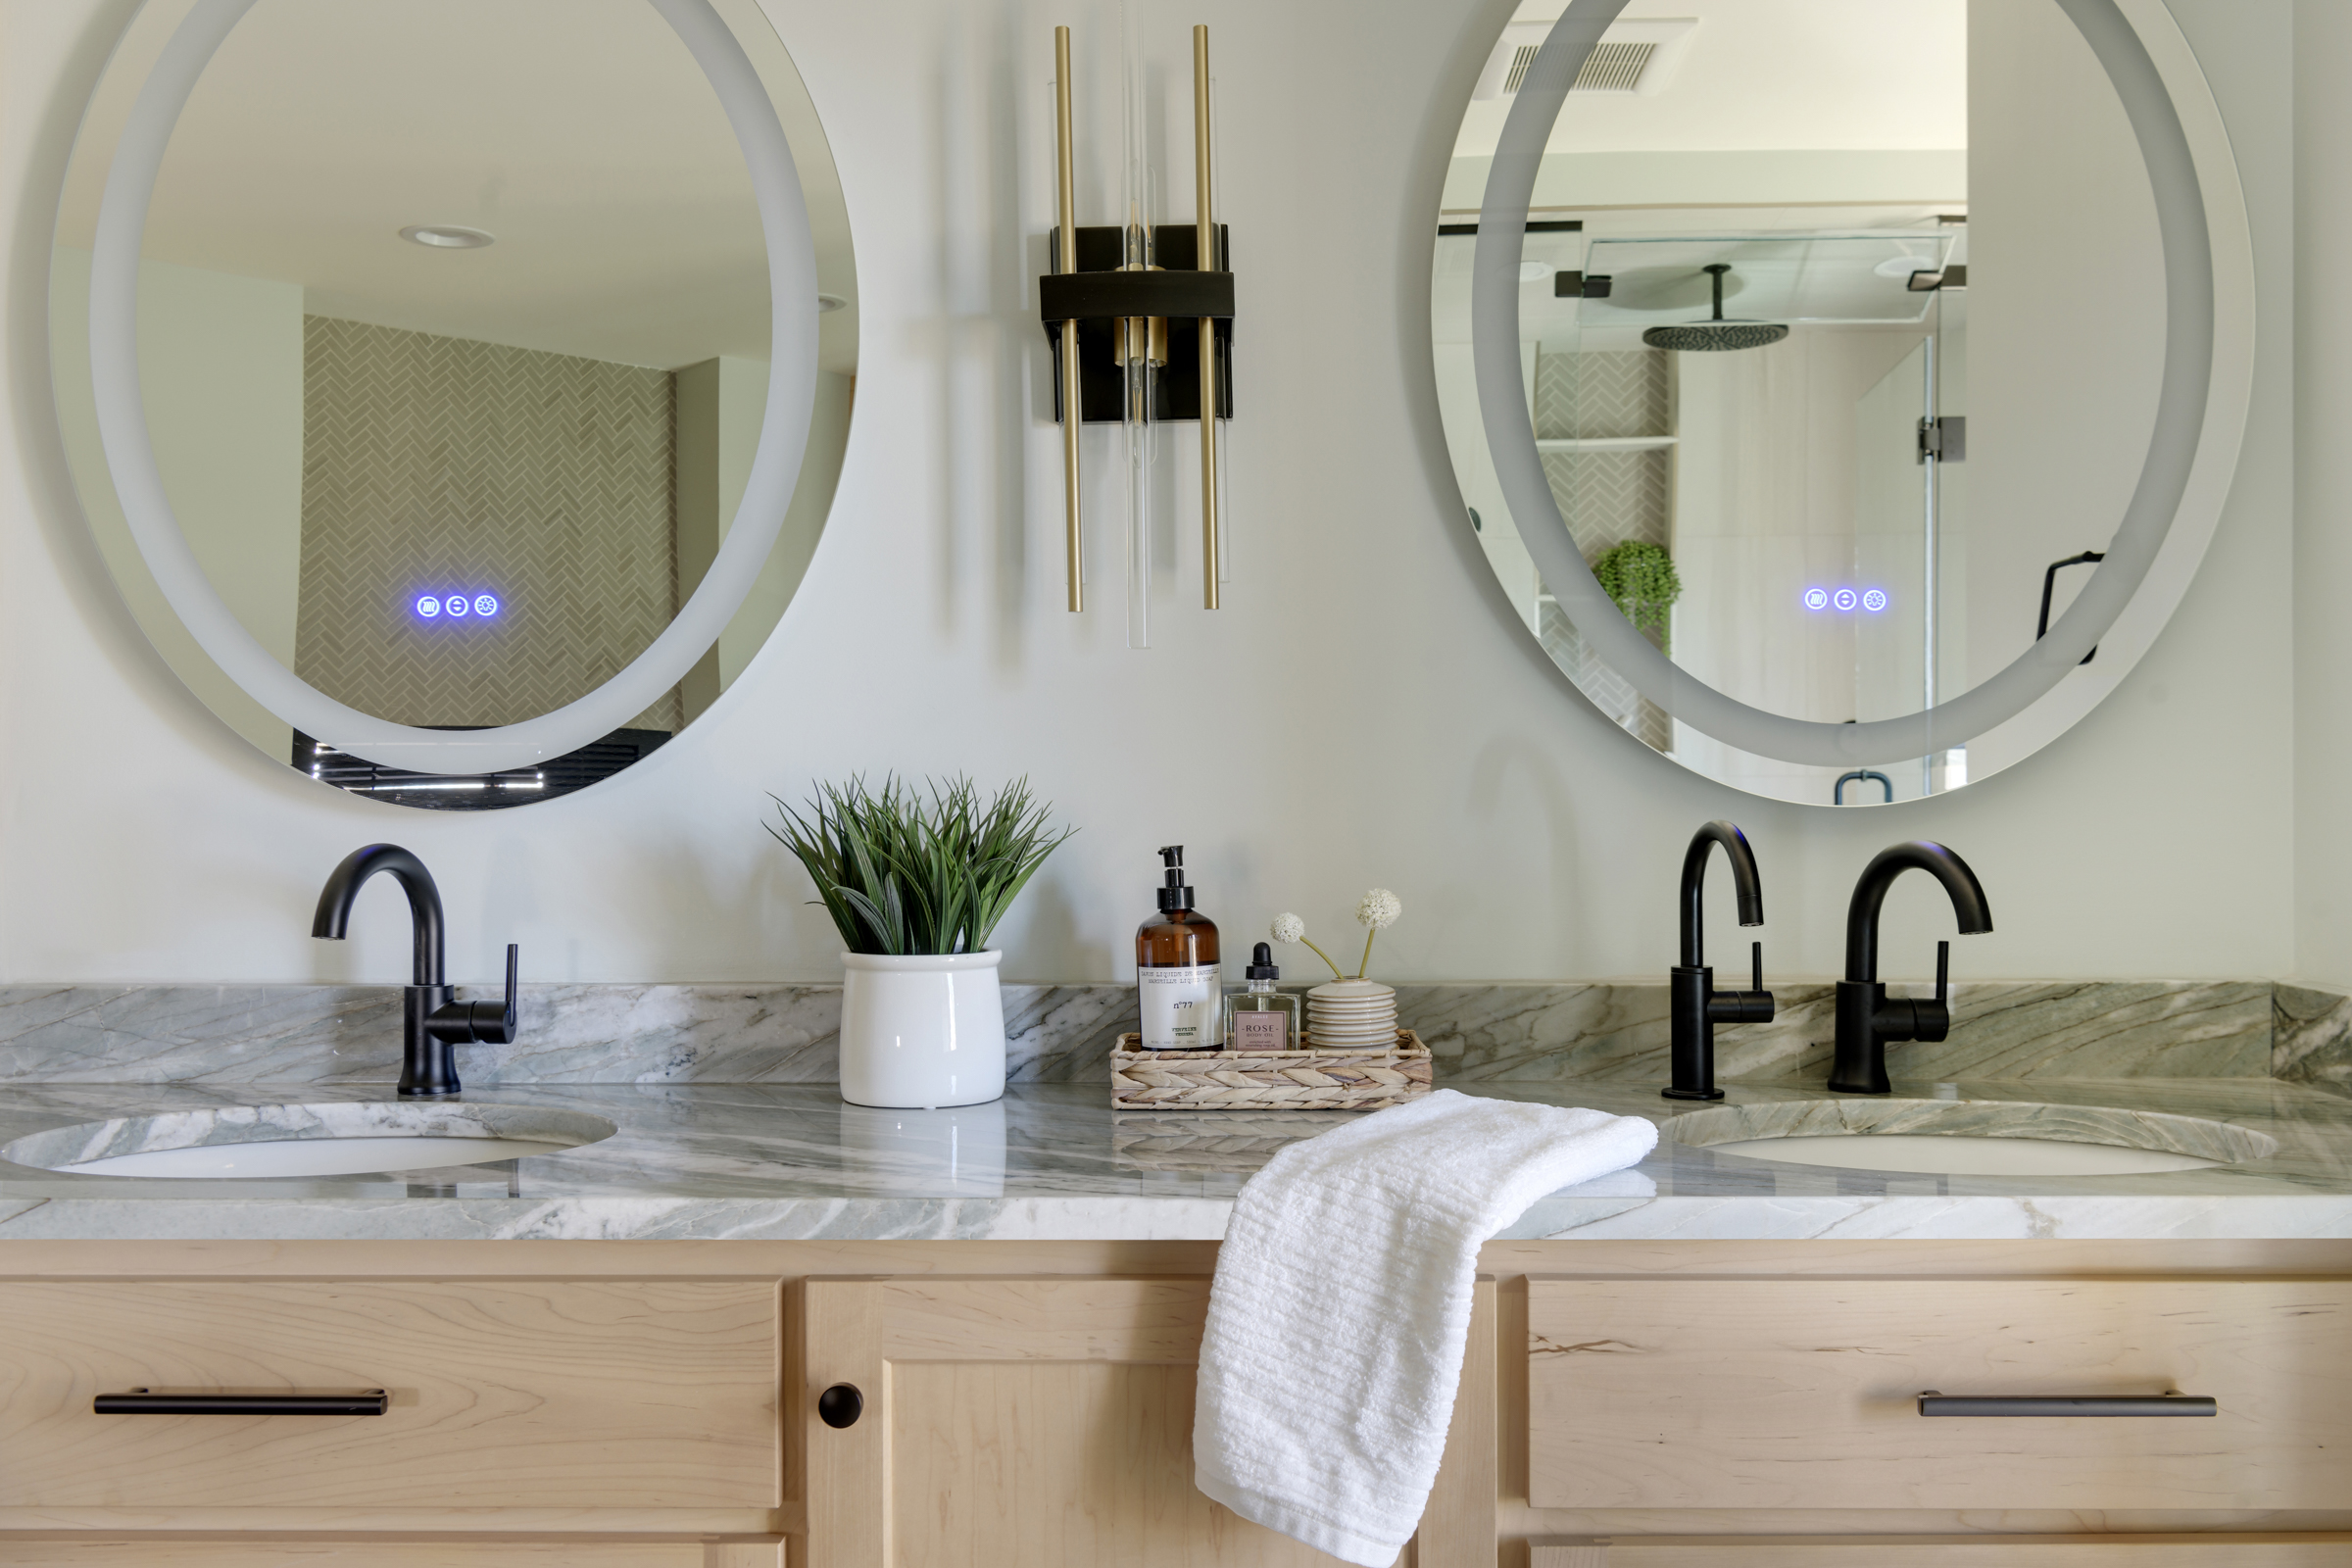 Mahtomedi MN Bathroom Remodel by White Birch Design LLC